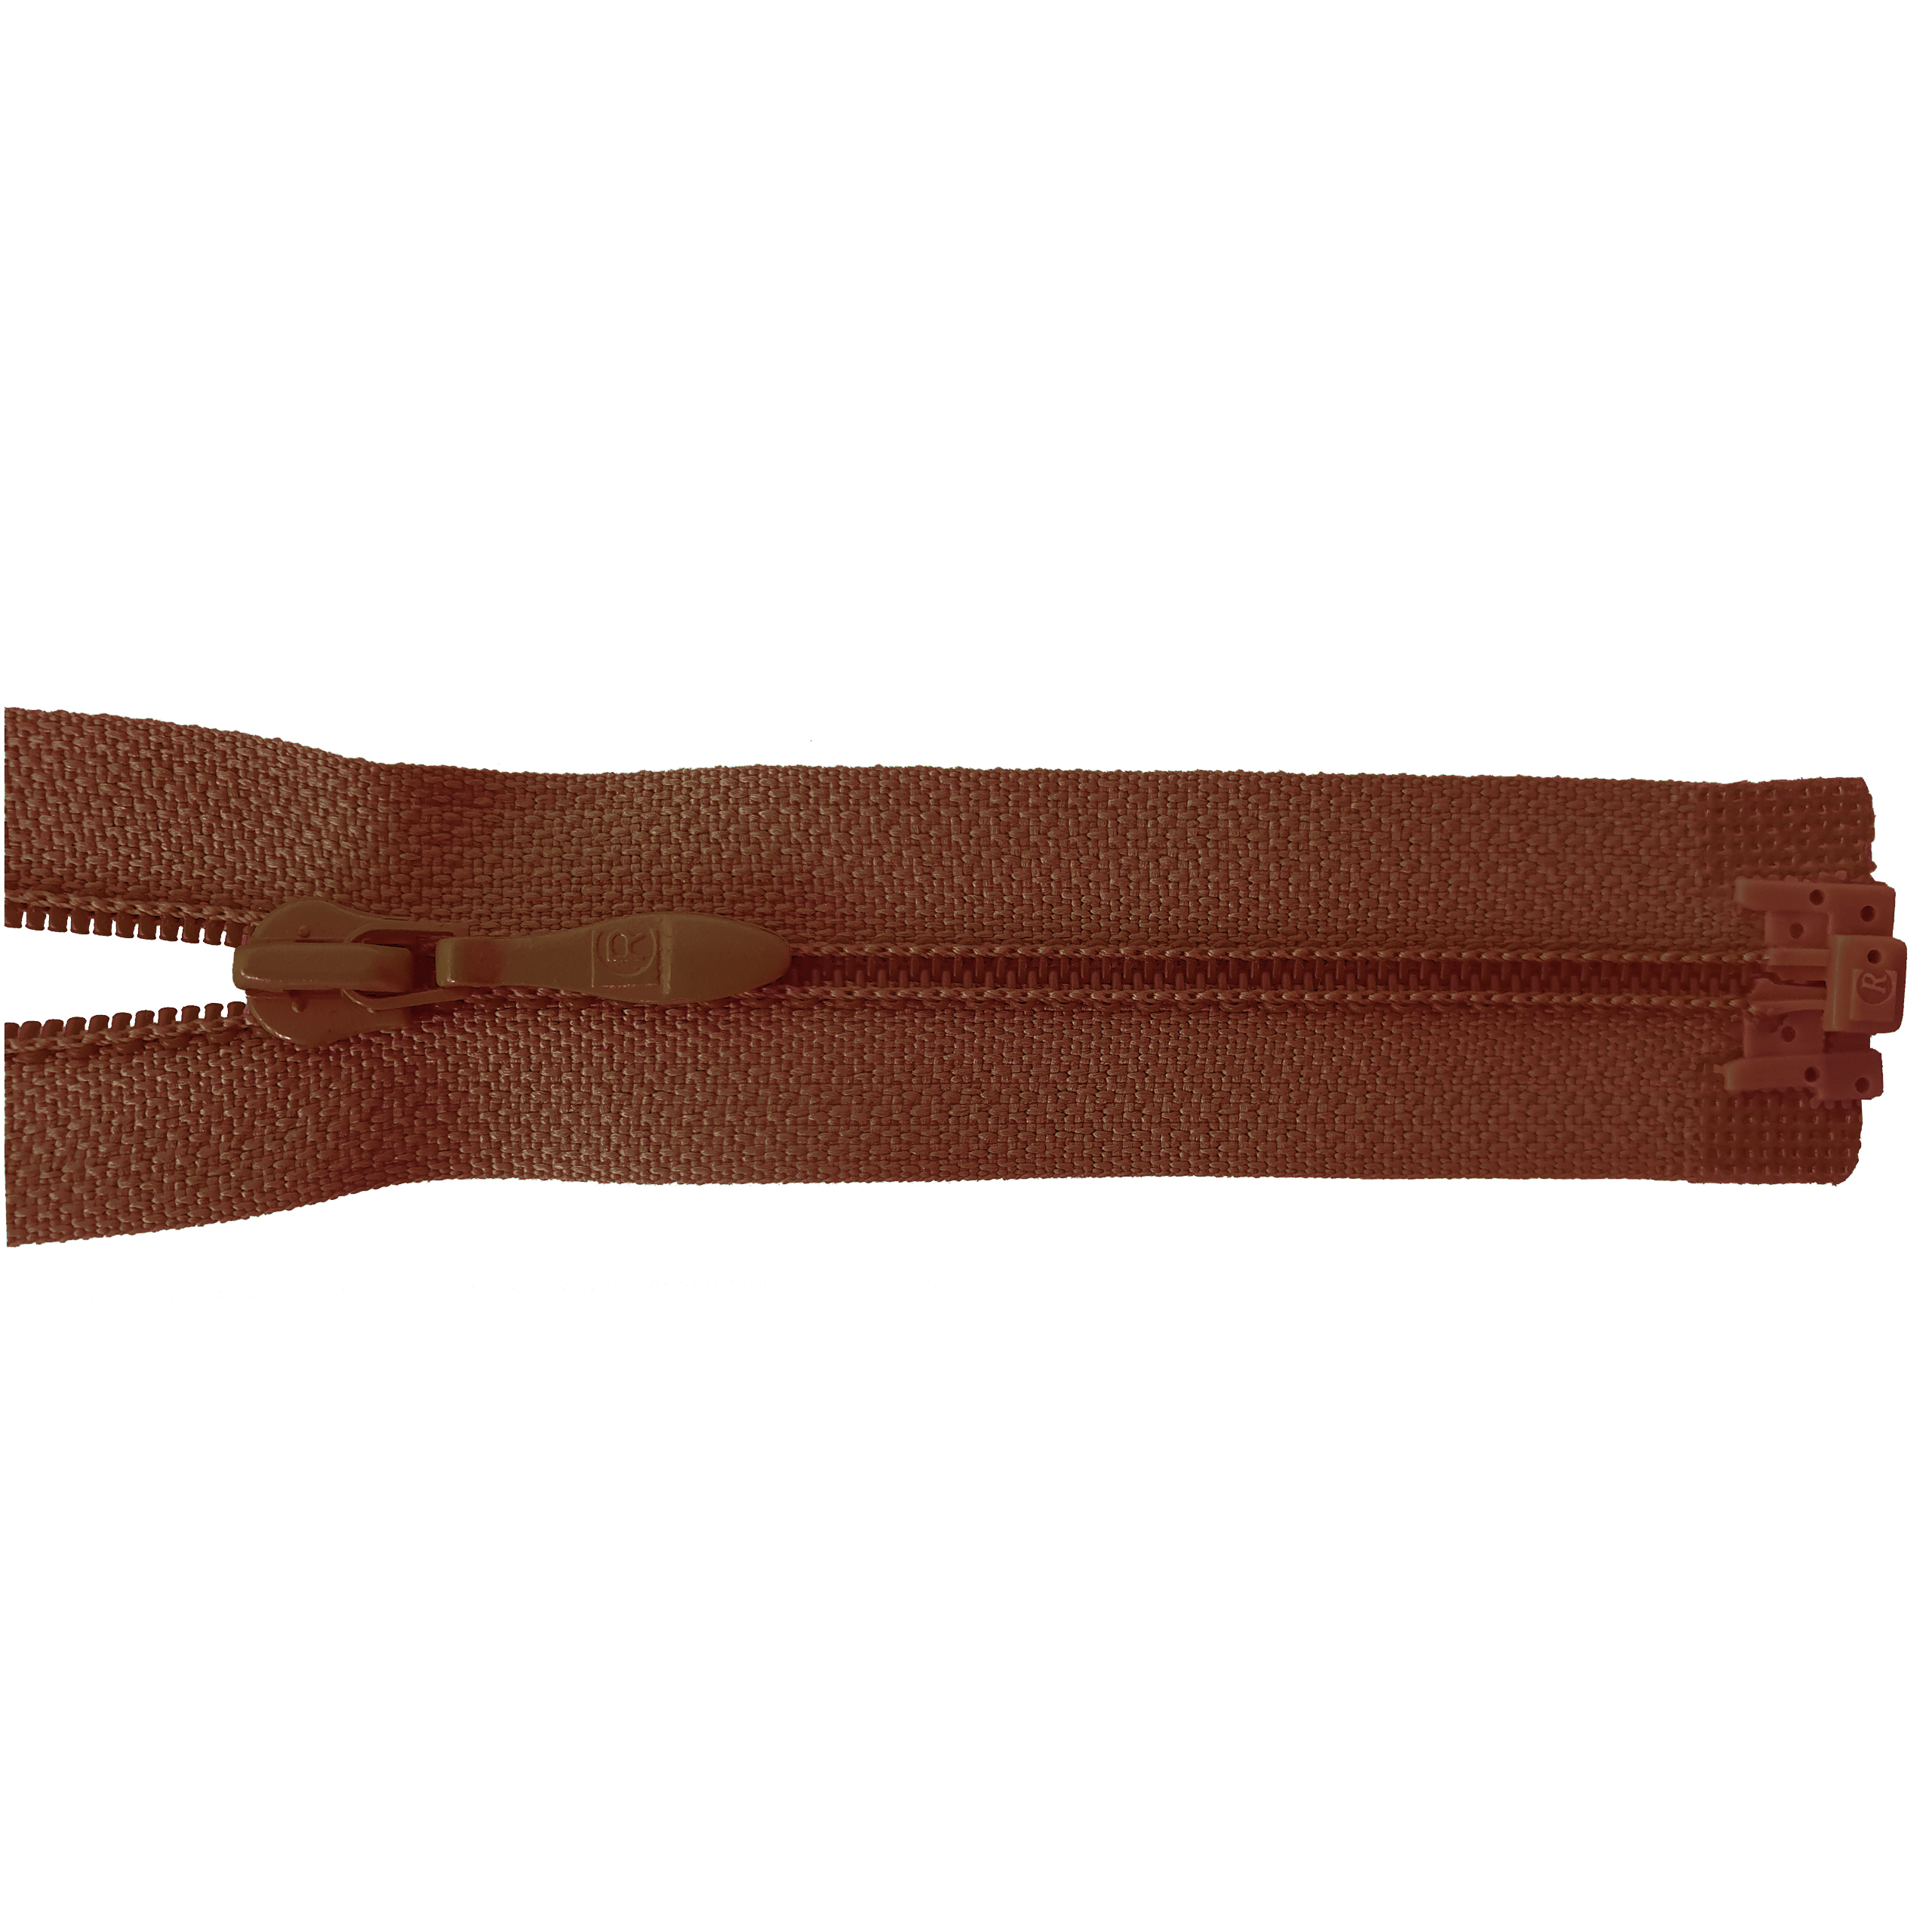 zipper 60cm,divisible, PES spiral, fein, medium brown